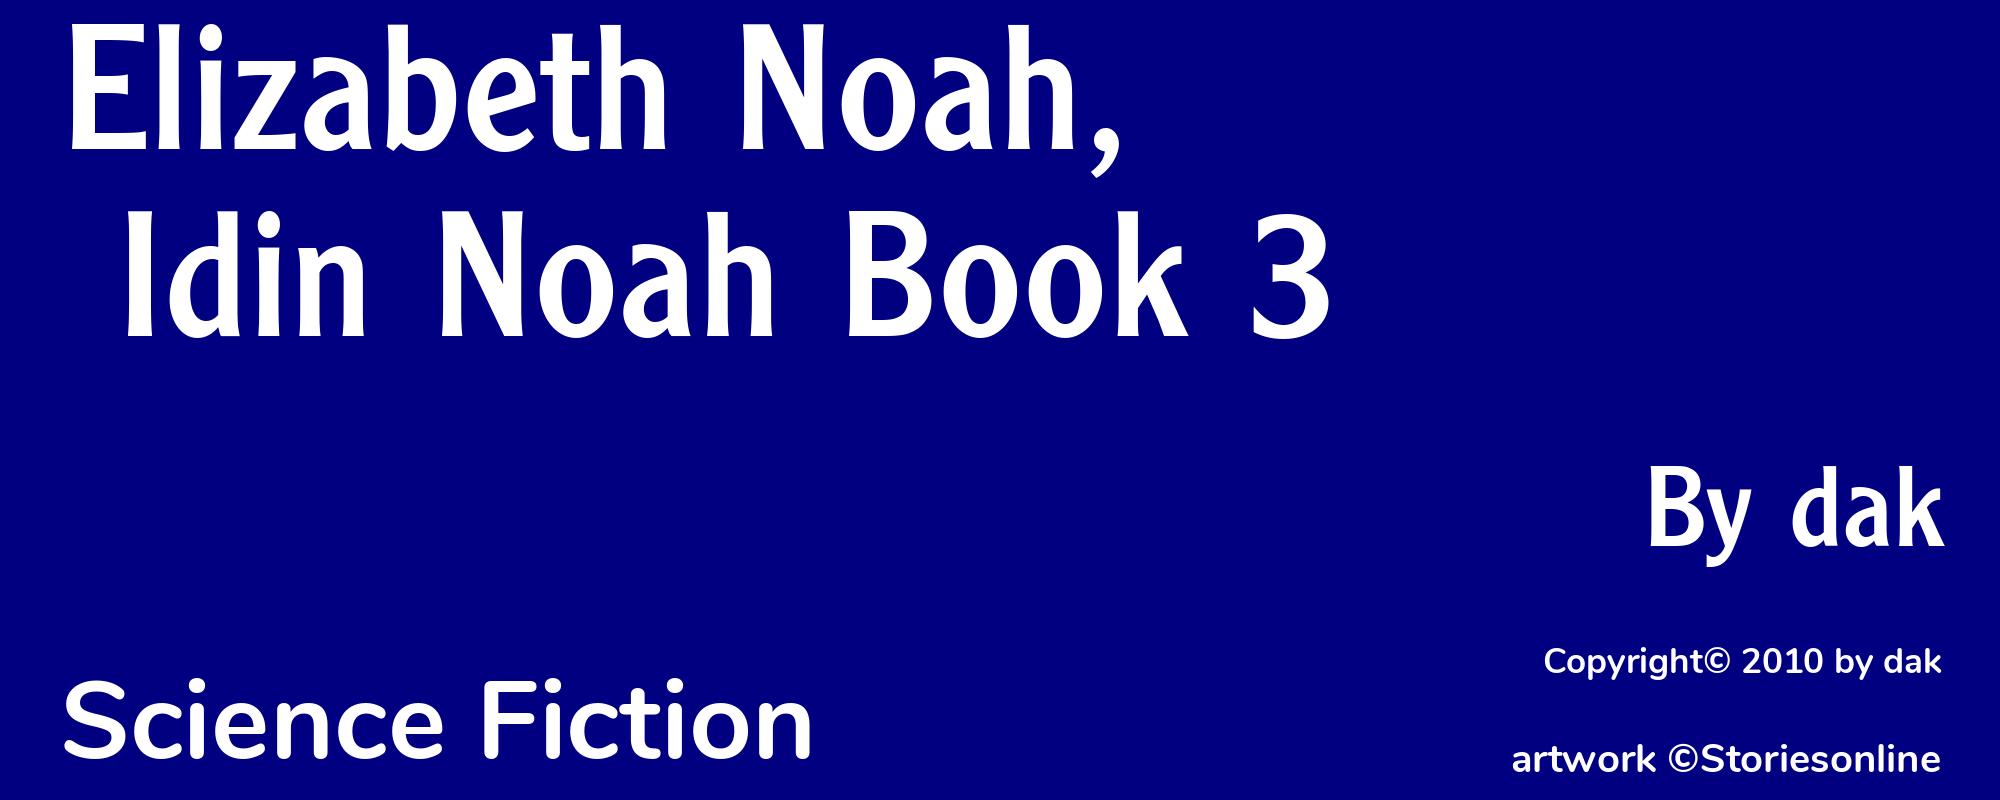 Elizabeth Noah, Idin Noah Book 3 - Cover